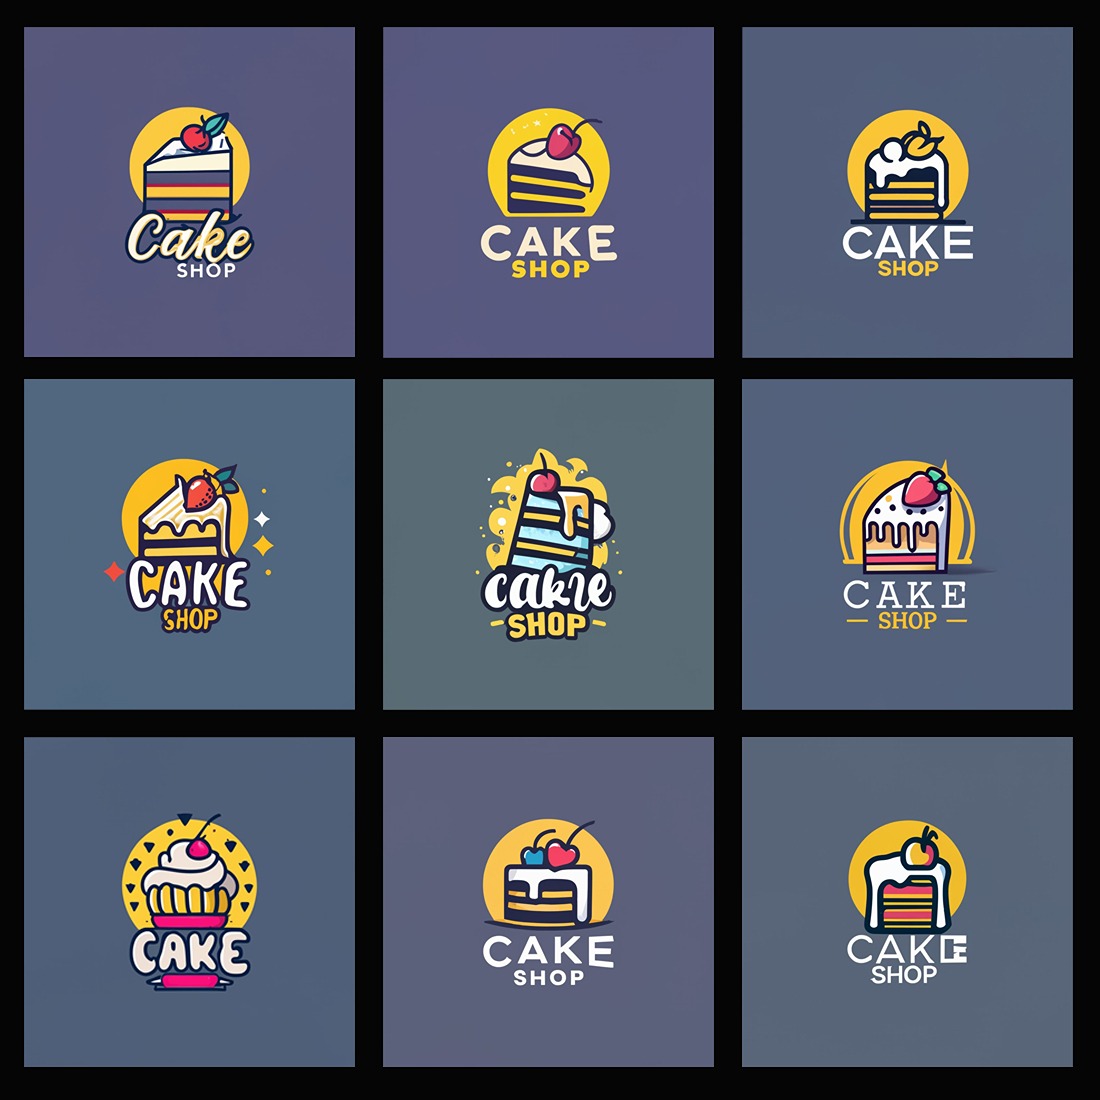 Cake Shop - Logo Design Template cover image.